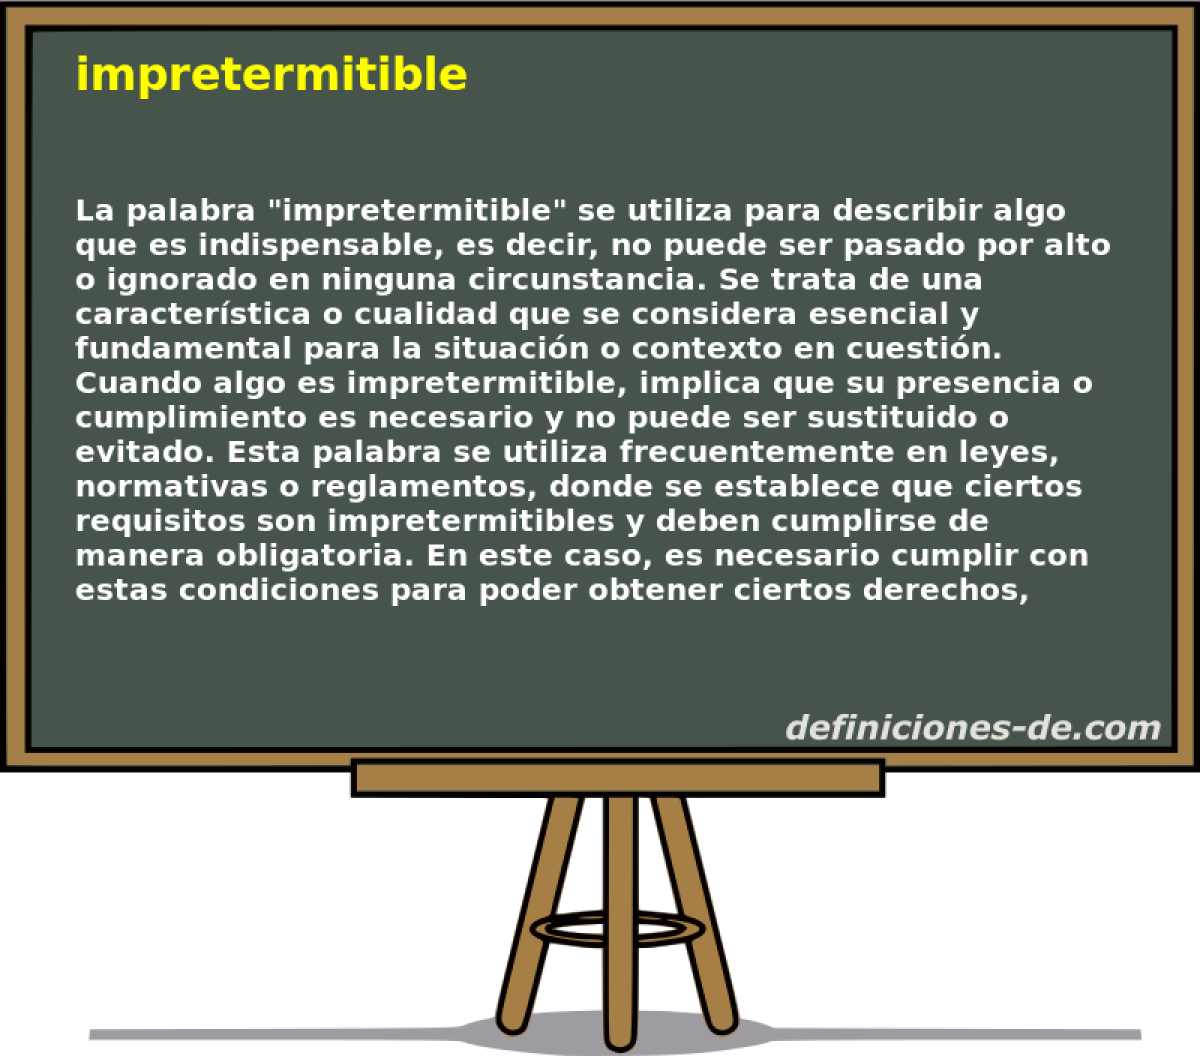 impretermitible 